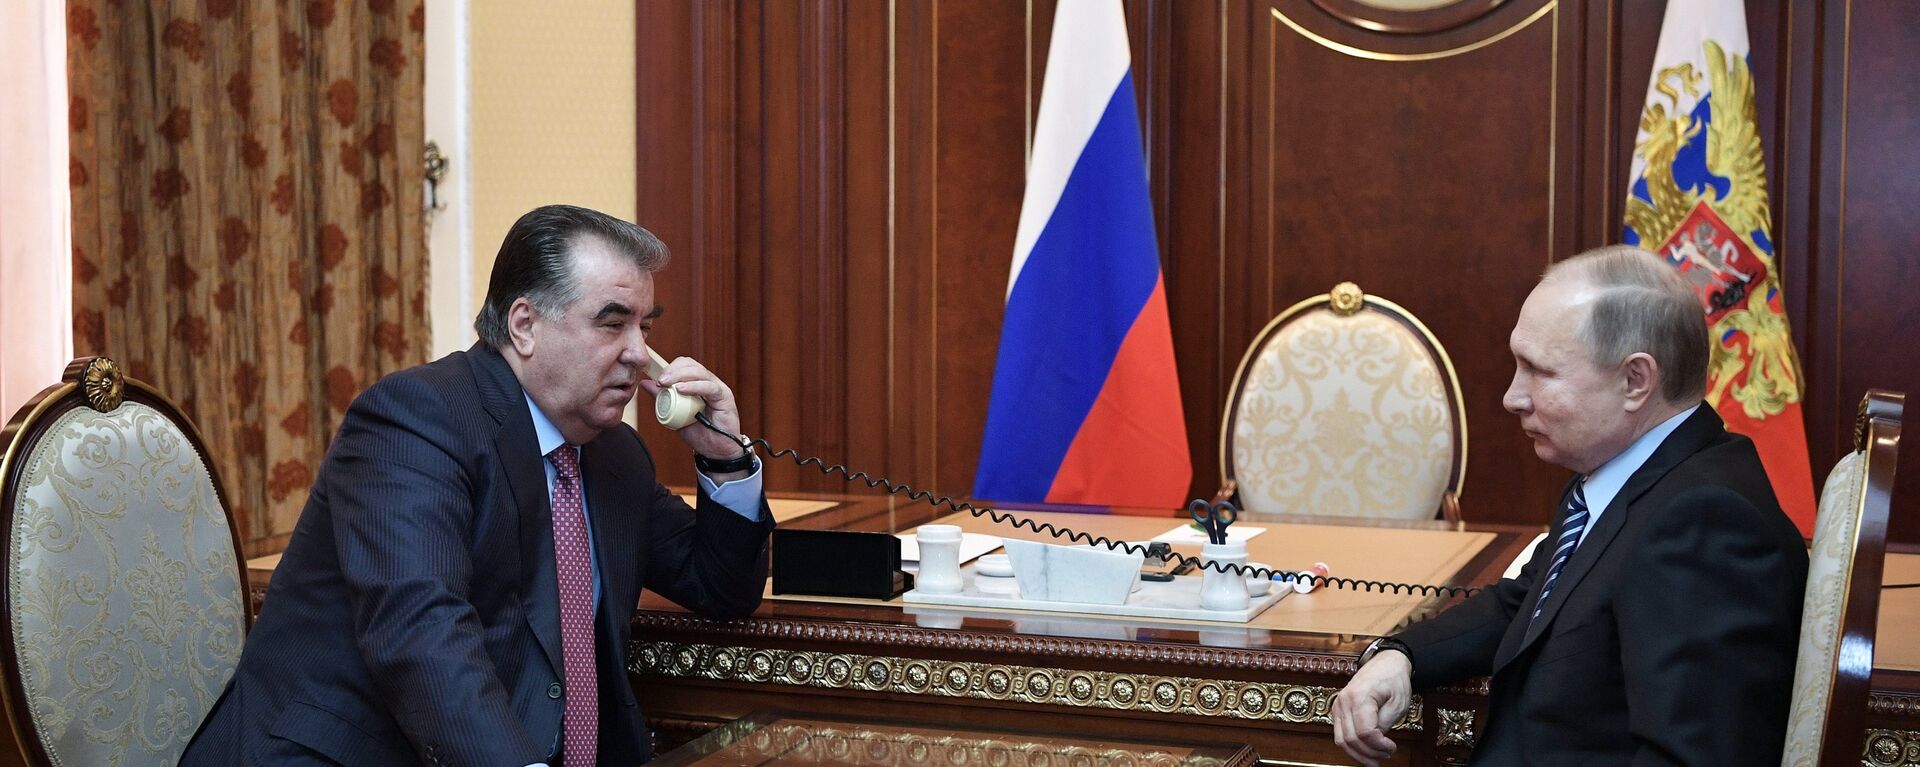 Президент РФ Владимир Путин и глава Таджикистана Эмомали Рахмон - Sputnik Таджикистан, 1920, 10.12.2018